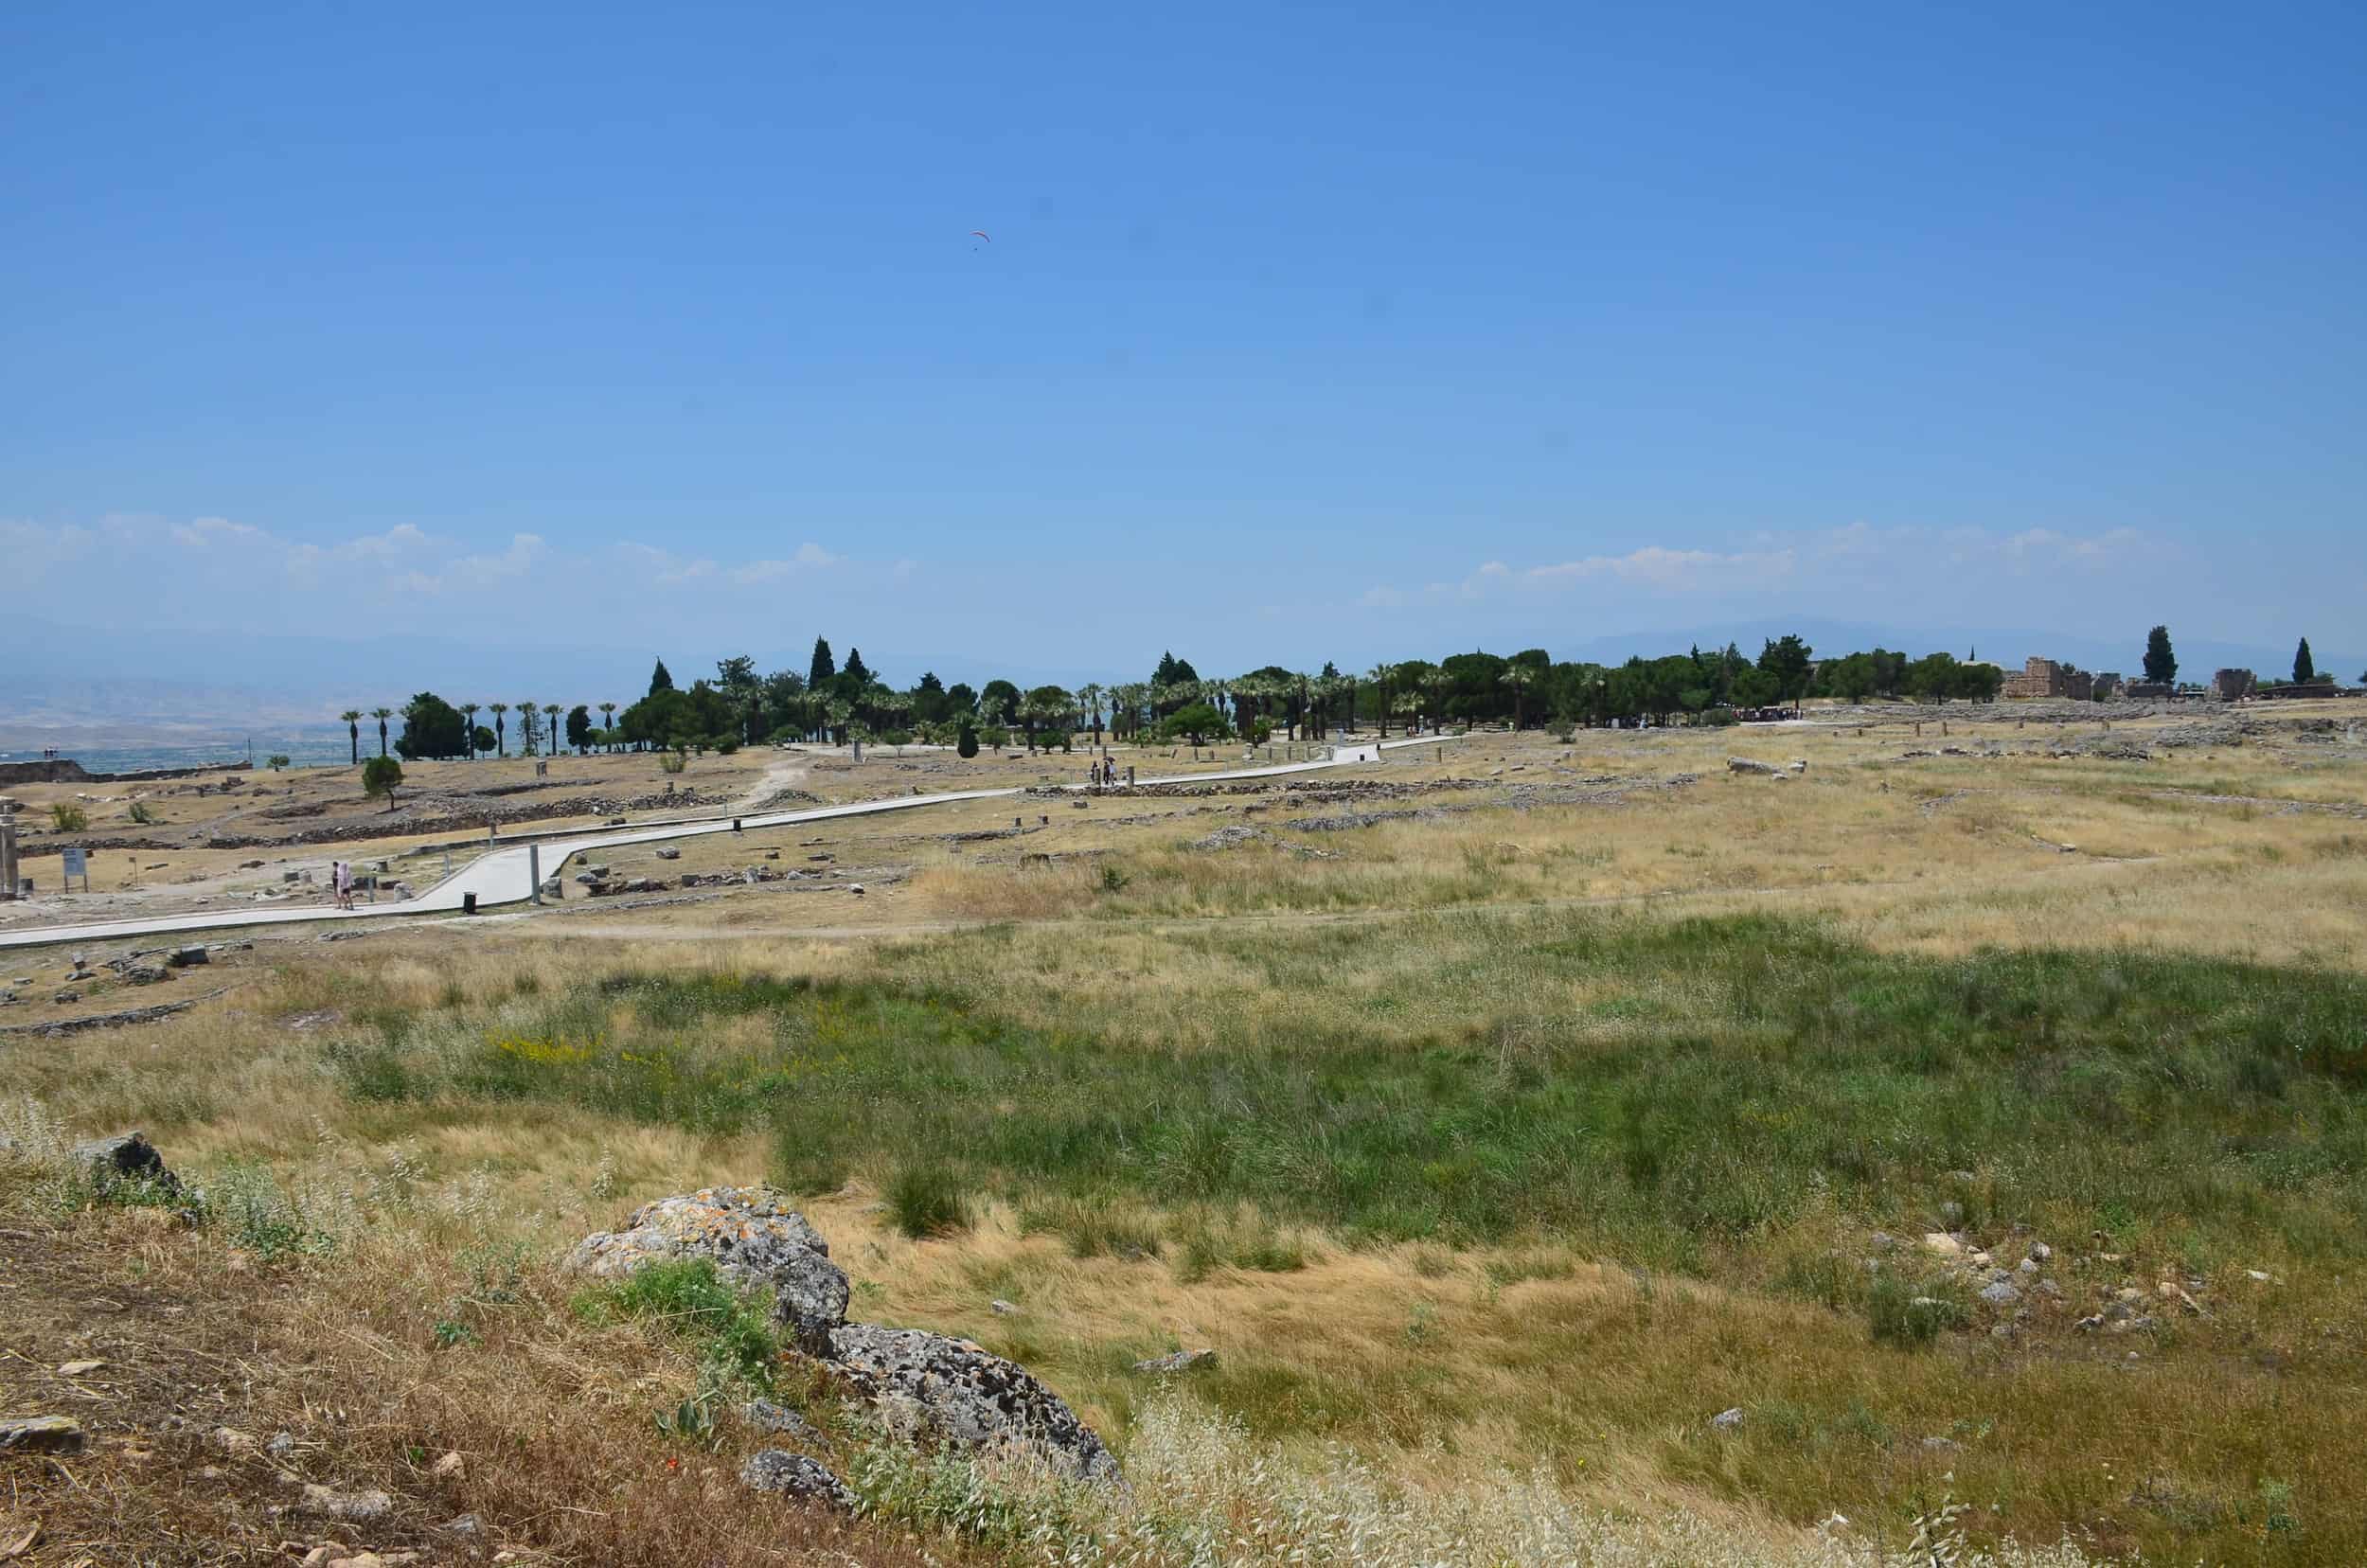 Hierapolis in Pamukkale, Turkey